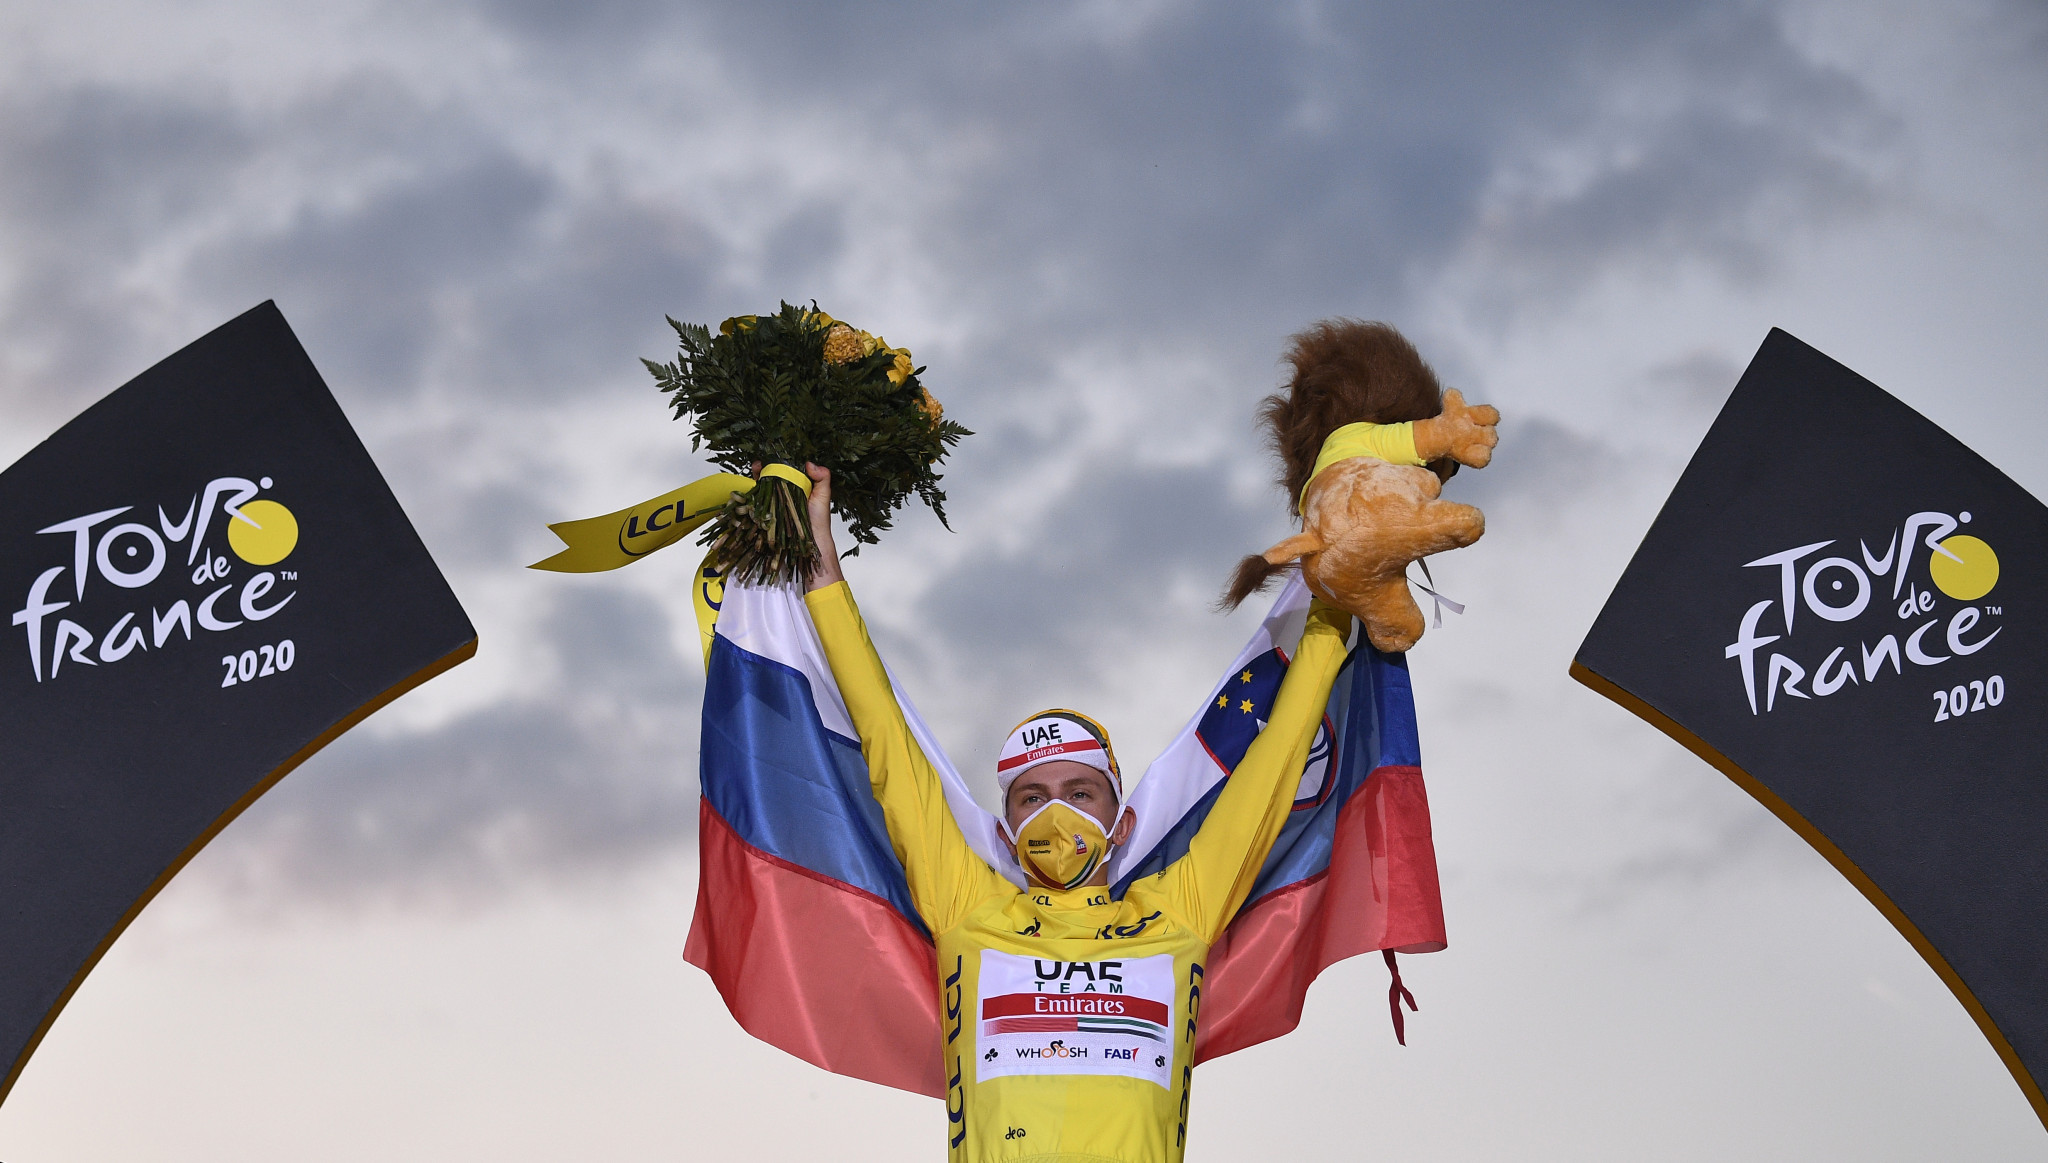 Tadej Pogačar was crowned winner of the Tour de France ©Getty Images